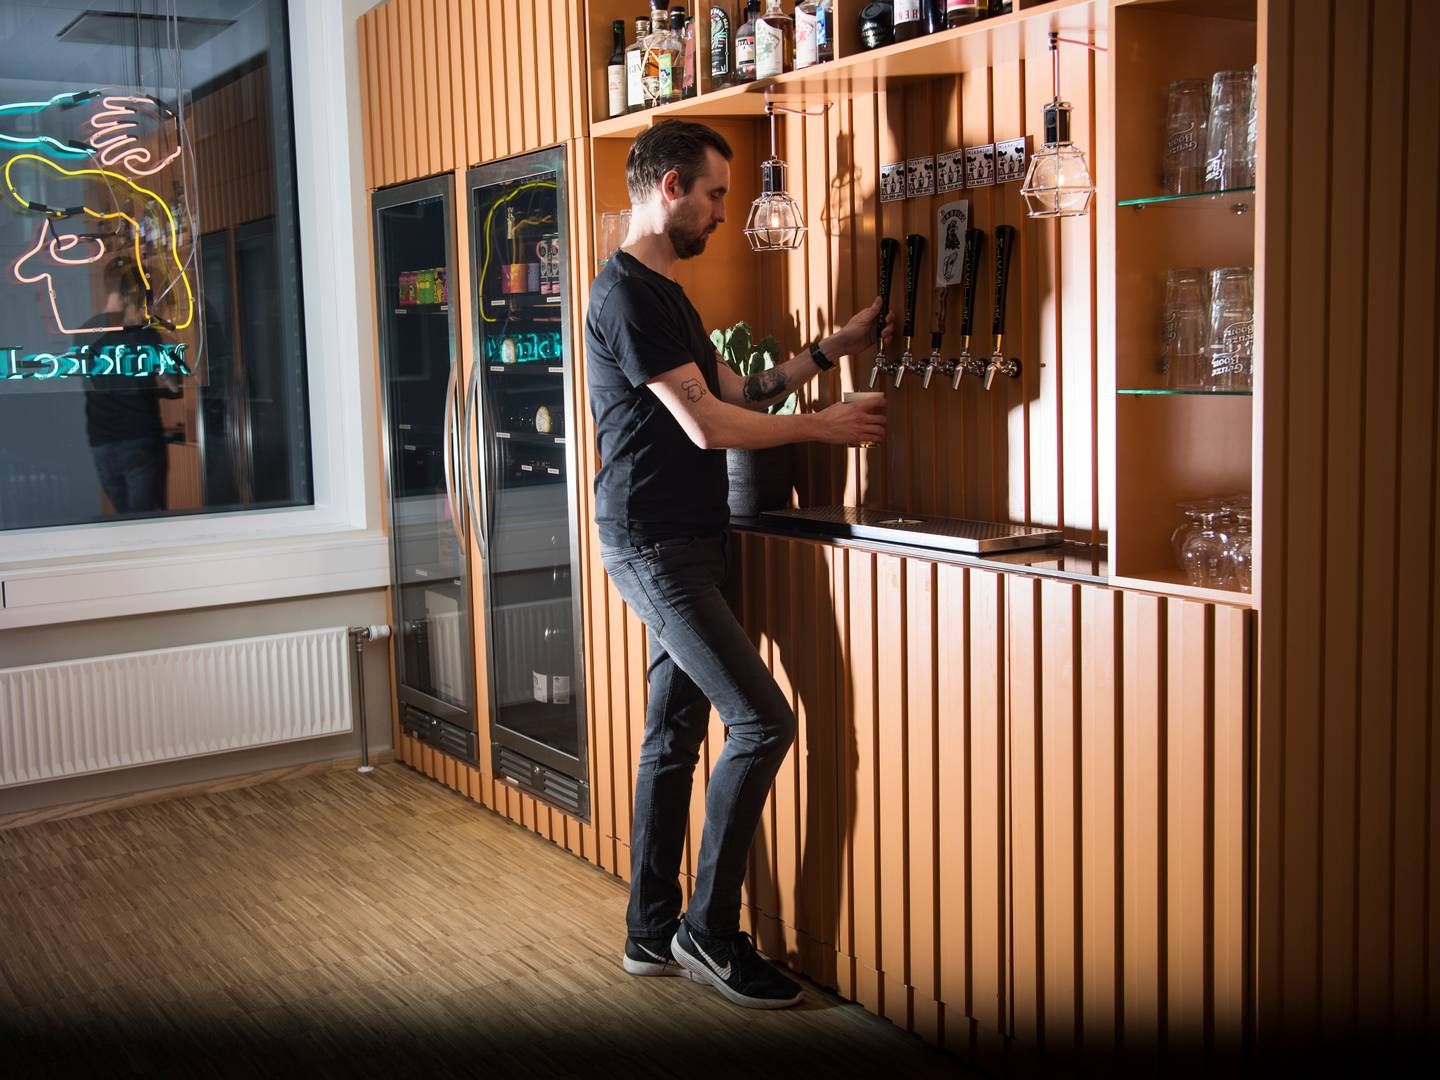 Mikkel Bjergsø overtog i december posten som adm. direktør i Mikkeller-bryggeriet, som han selv har stiftet. | Foto: Gregers Tycho/JP/Ritzau Scanpix.